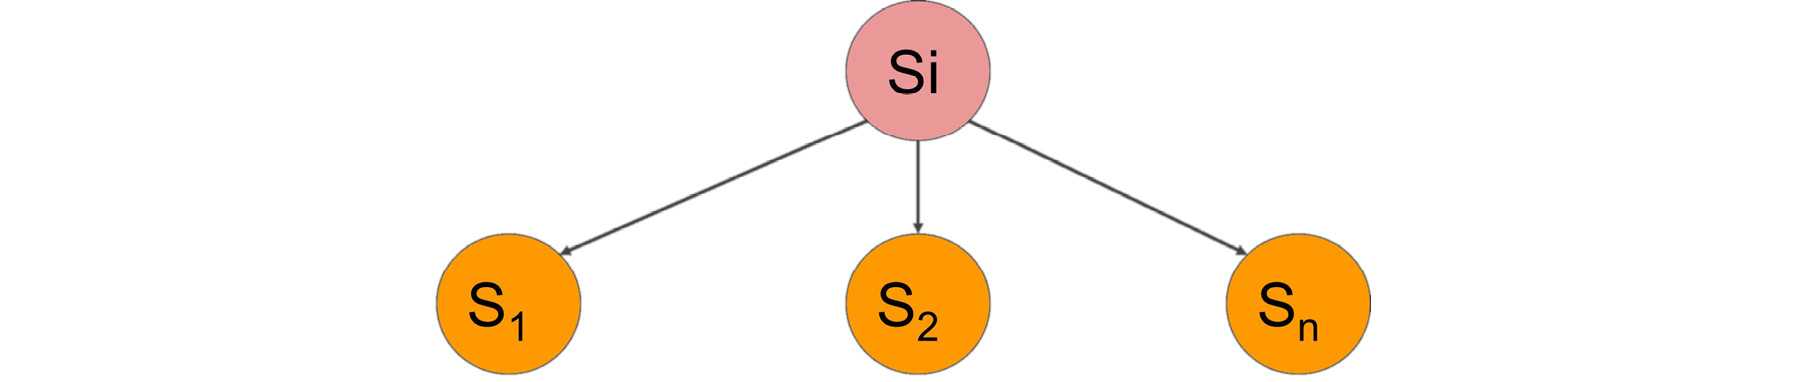 Figure 2.6 Tree diagram denoting the successor states of the function